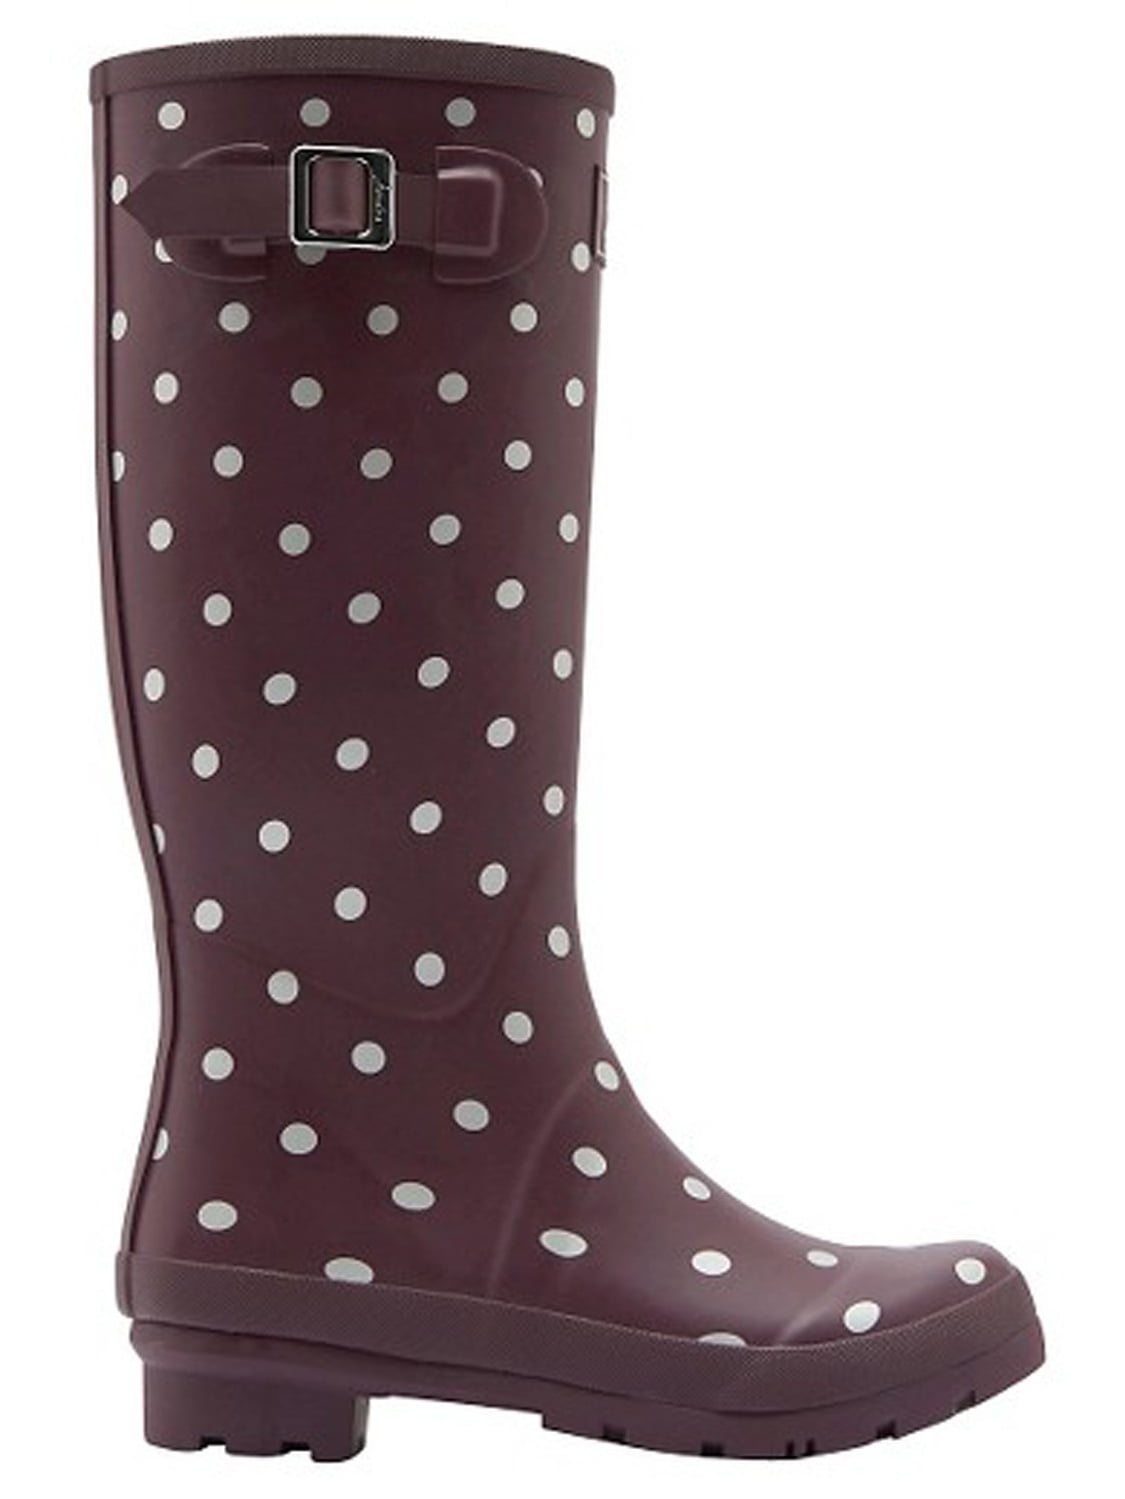 Wellies rain boots